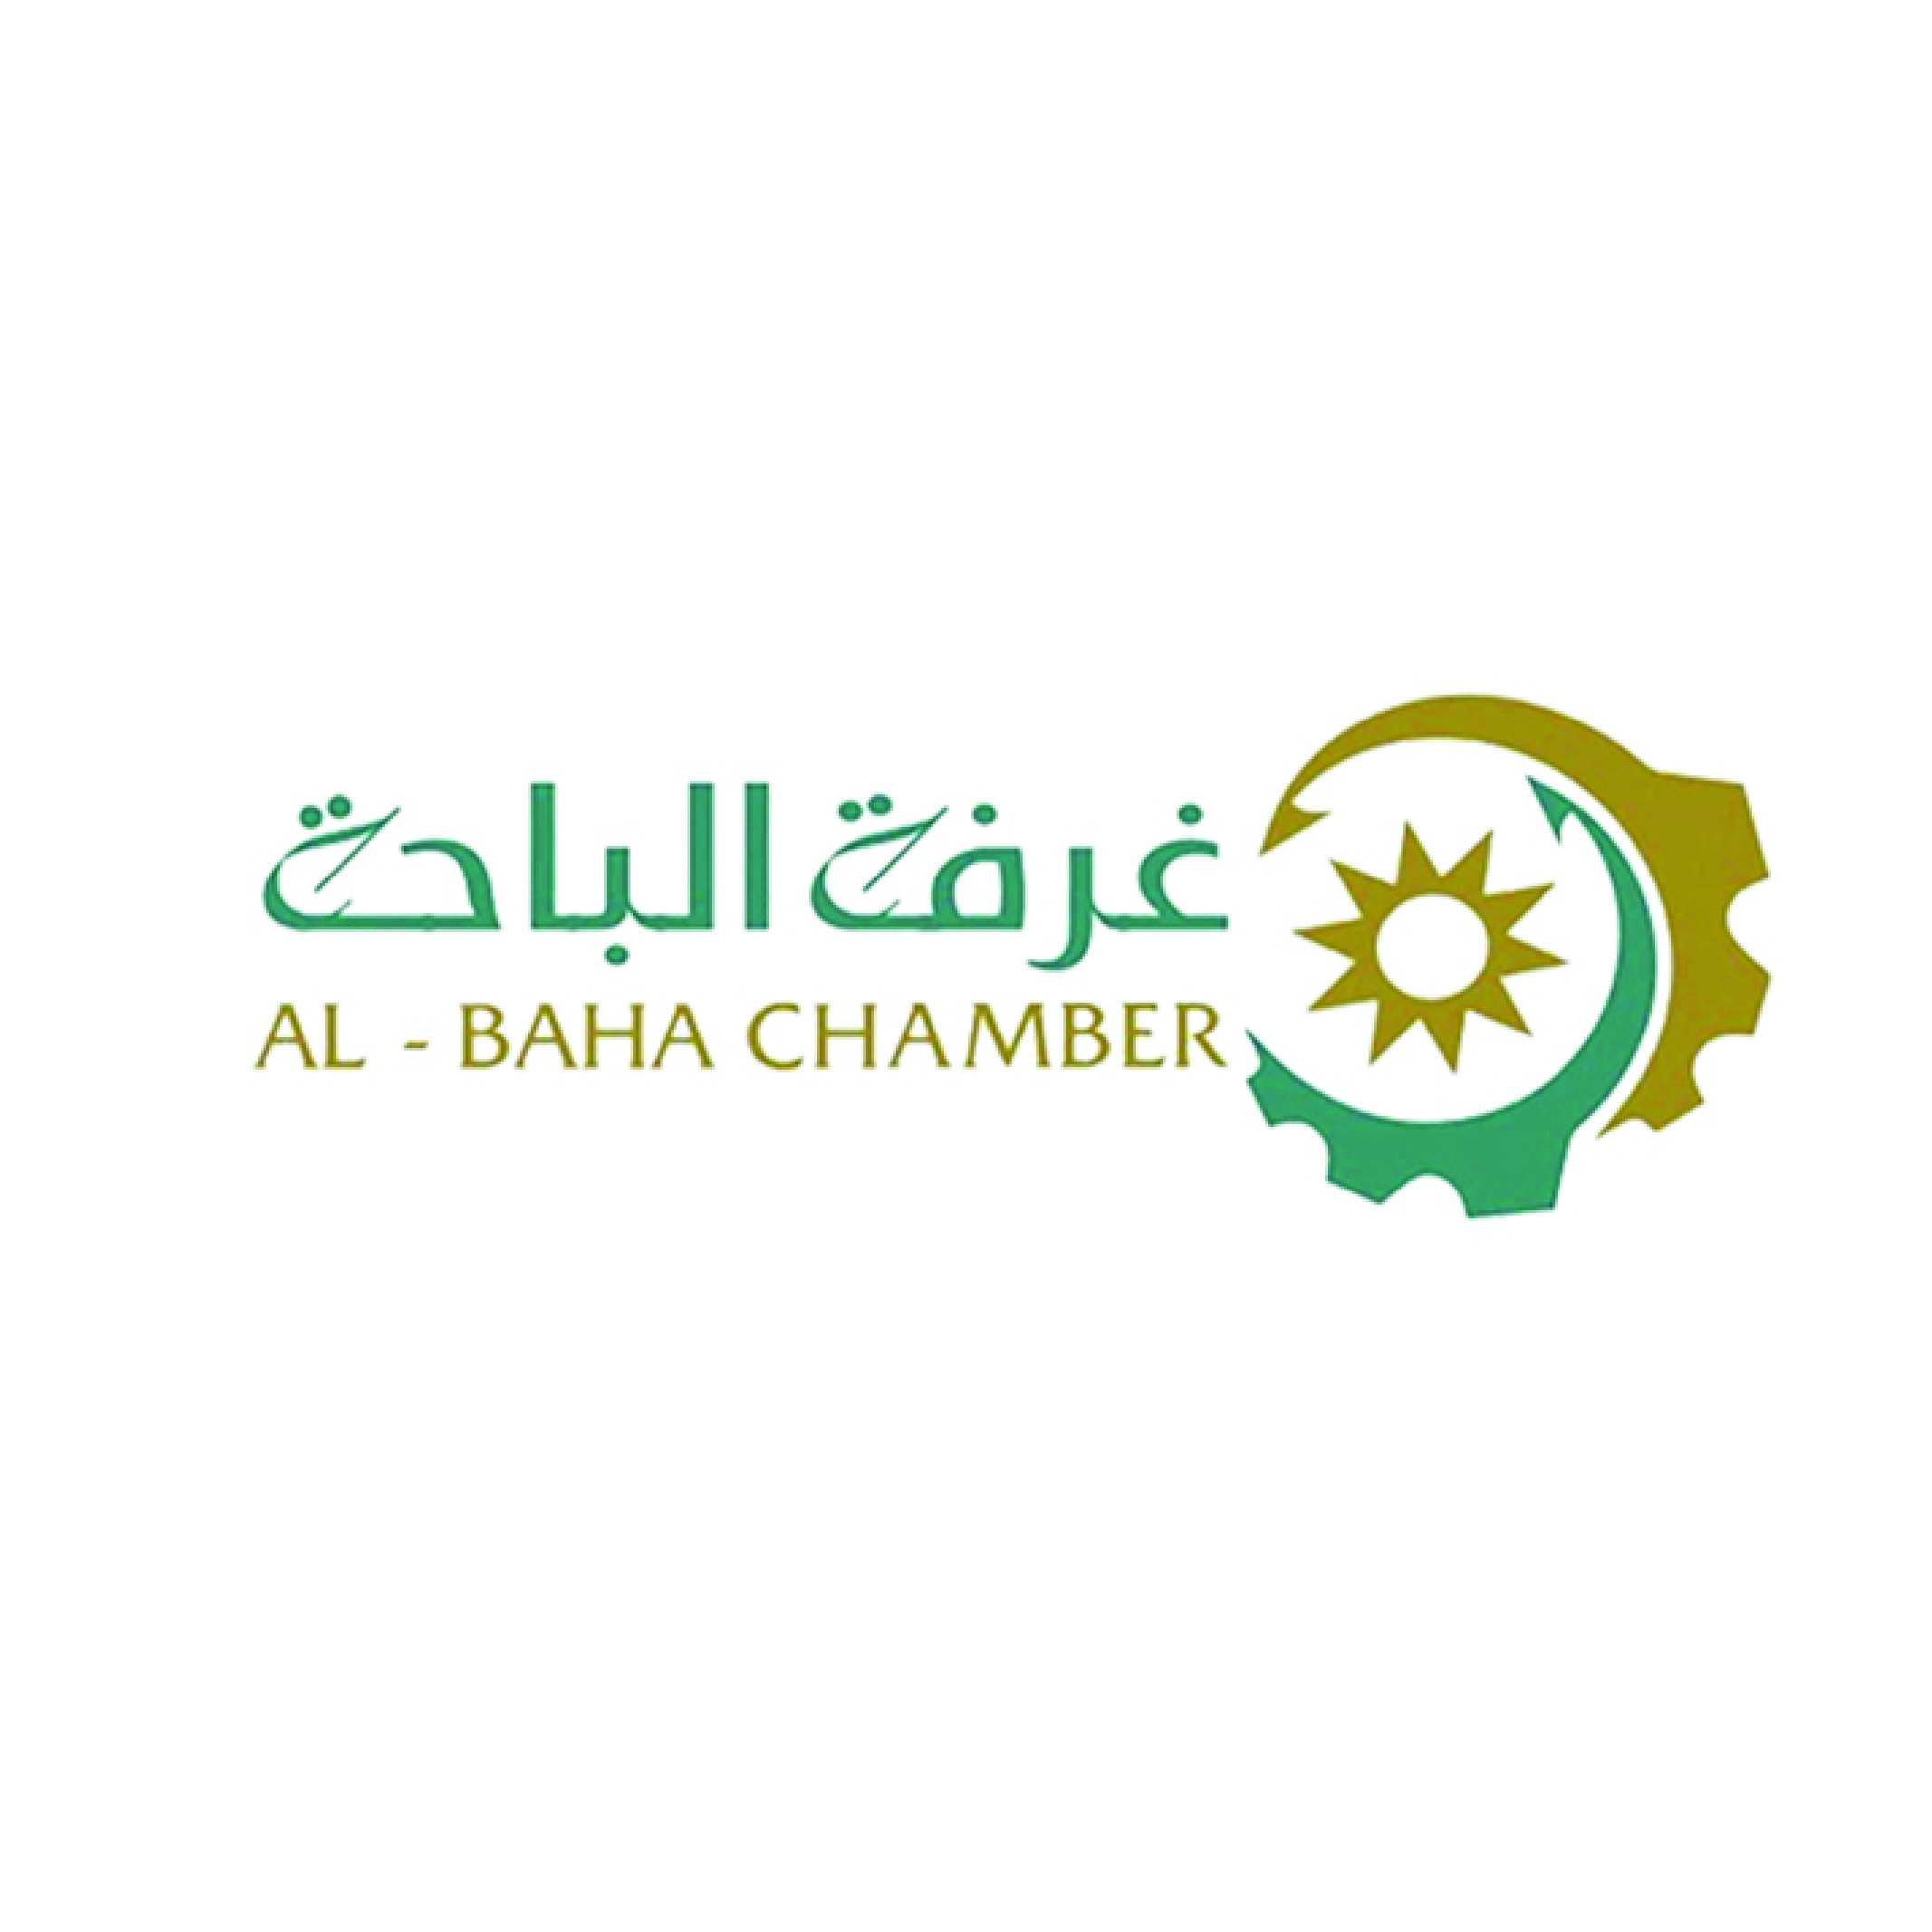 AL - BAHA CHAMBER